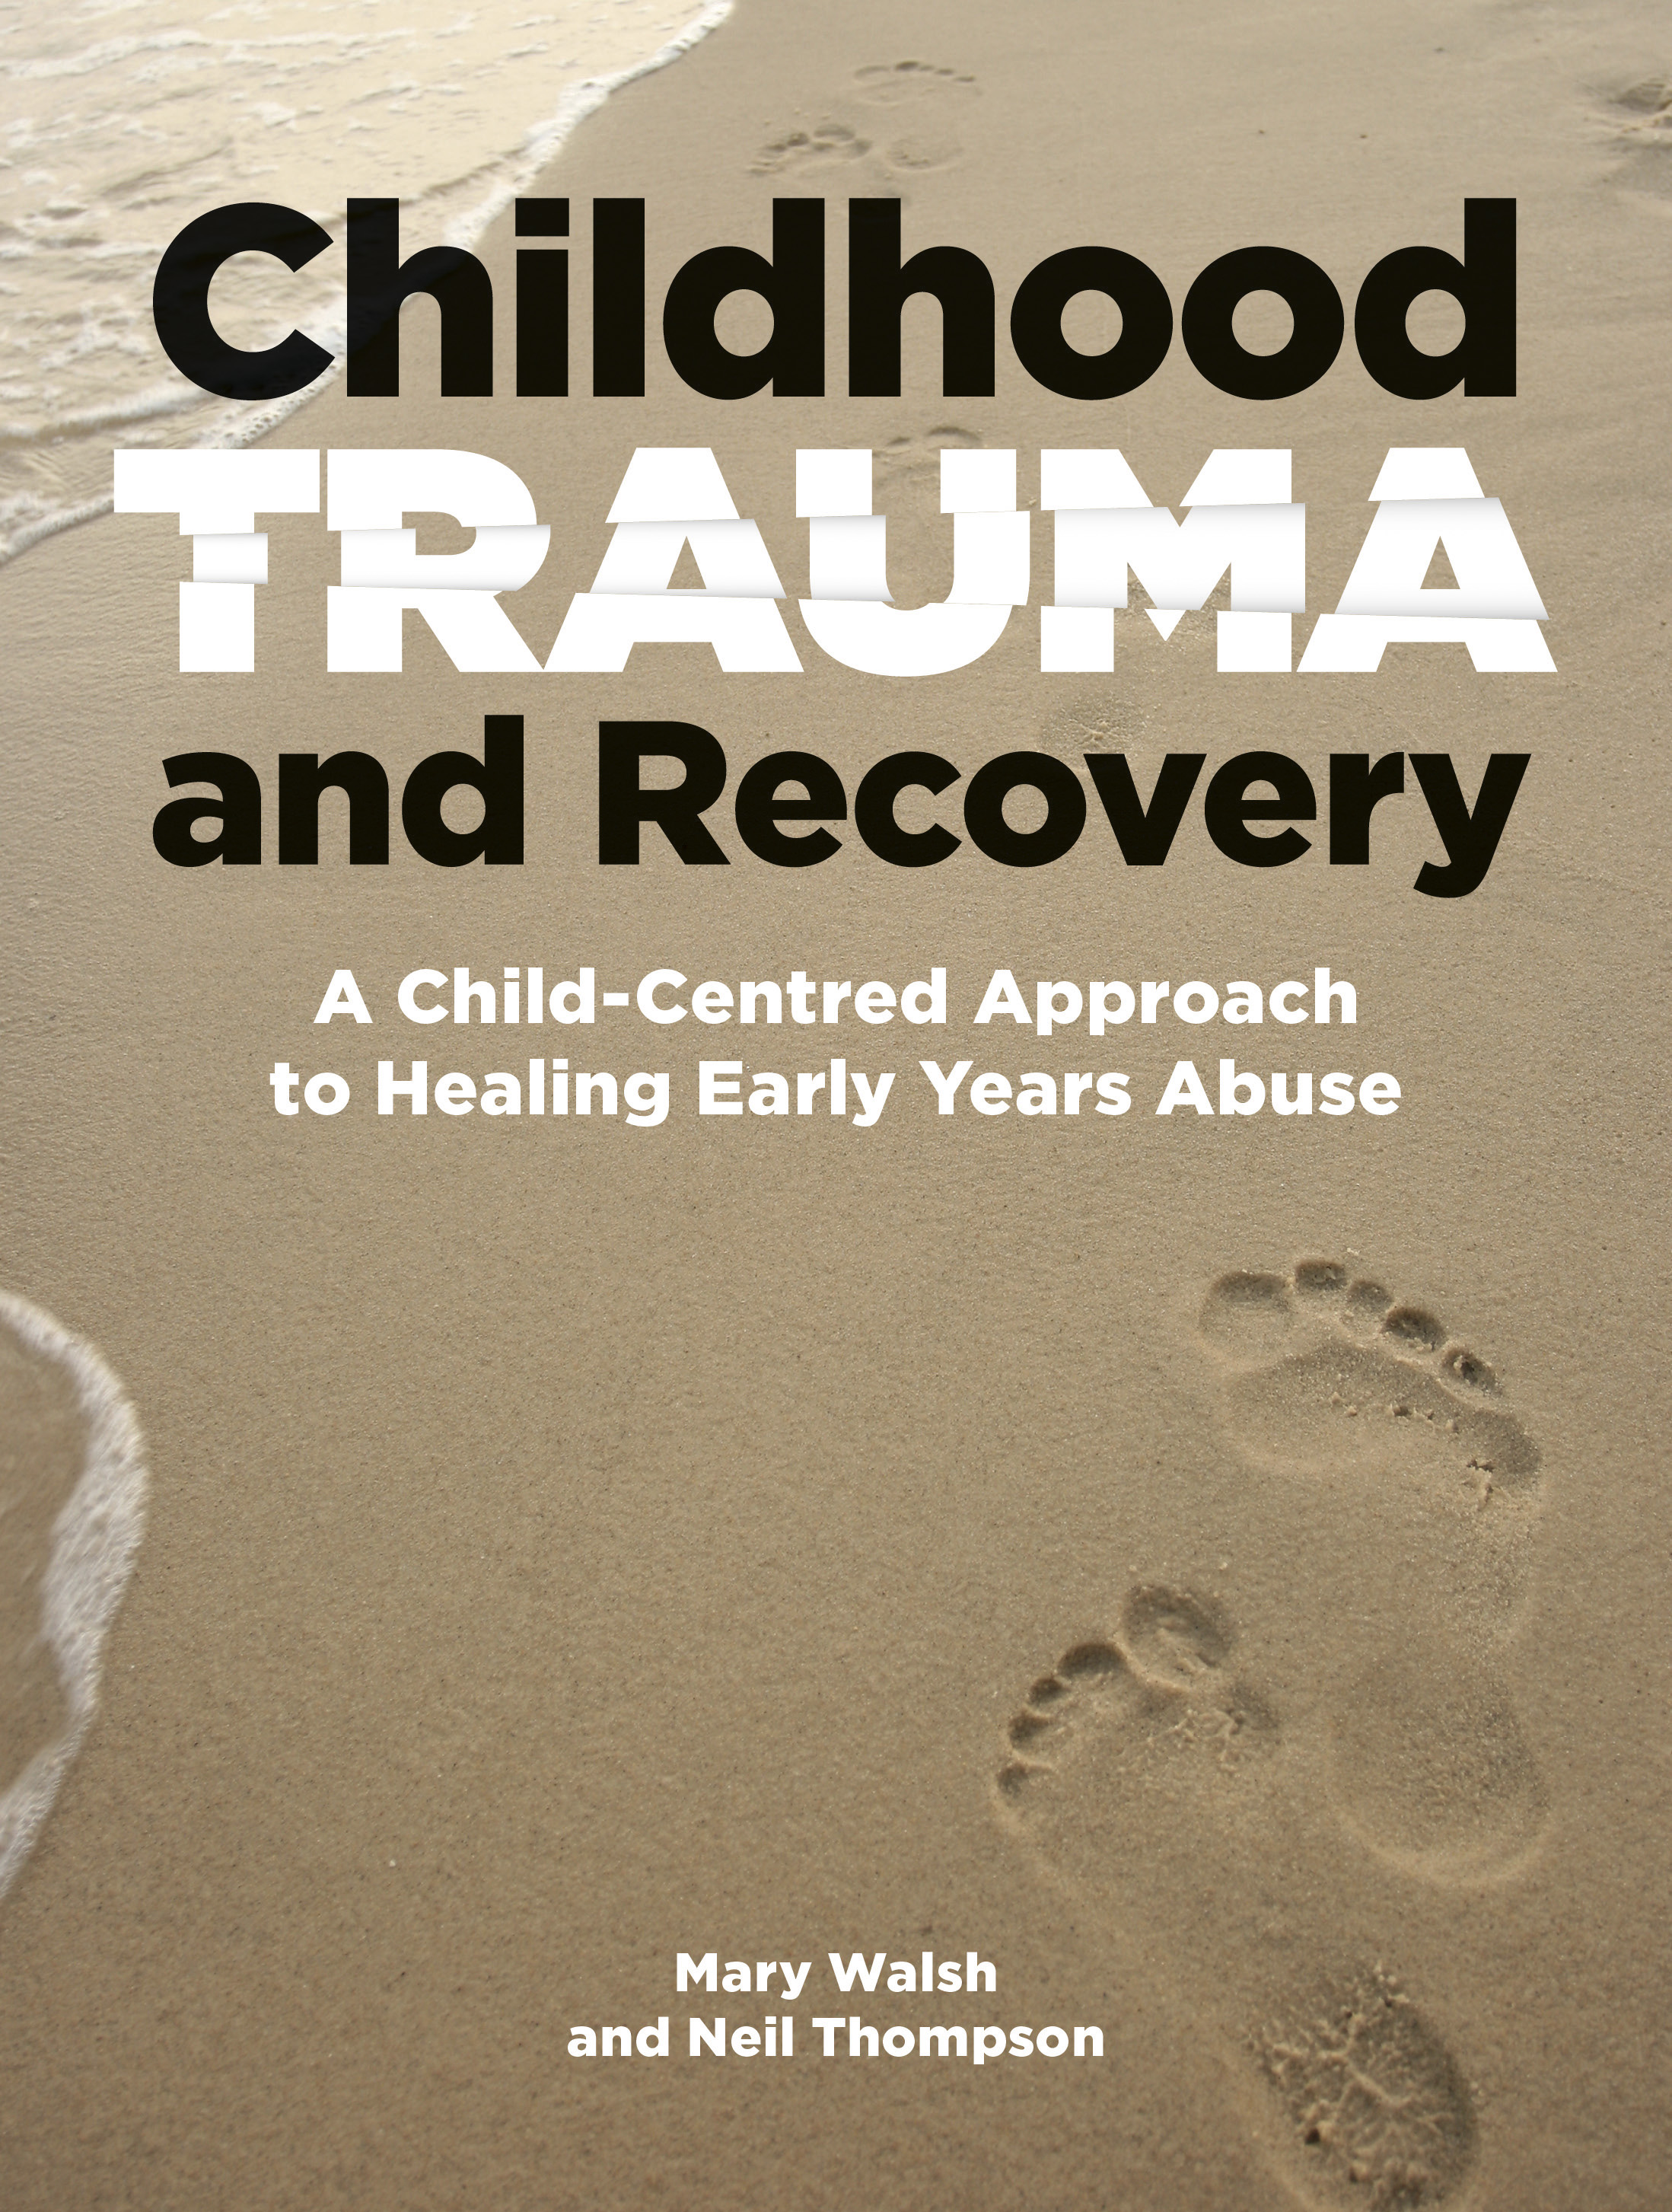 books on trauma biographies